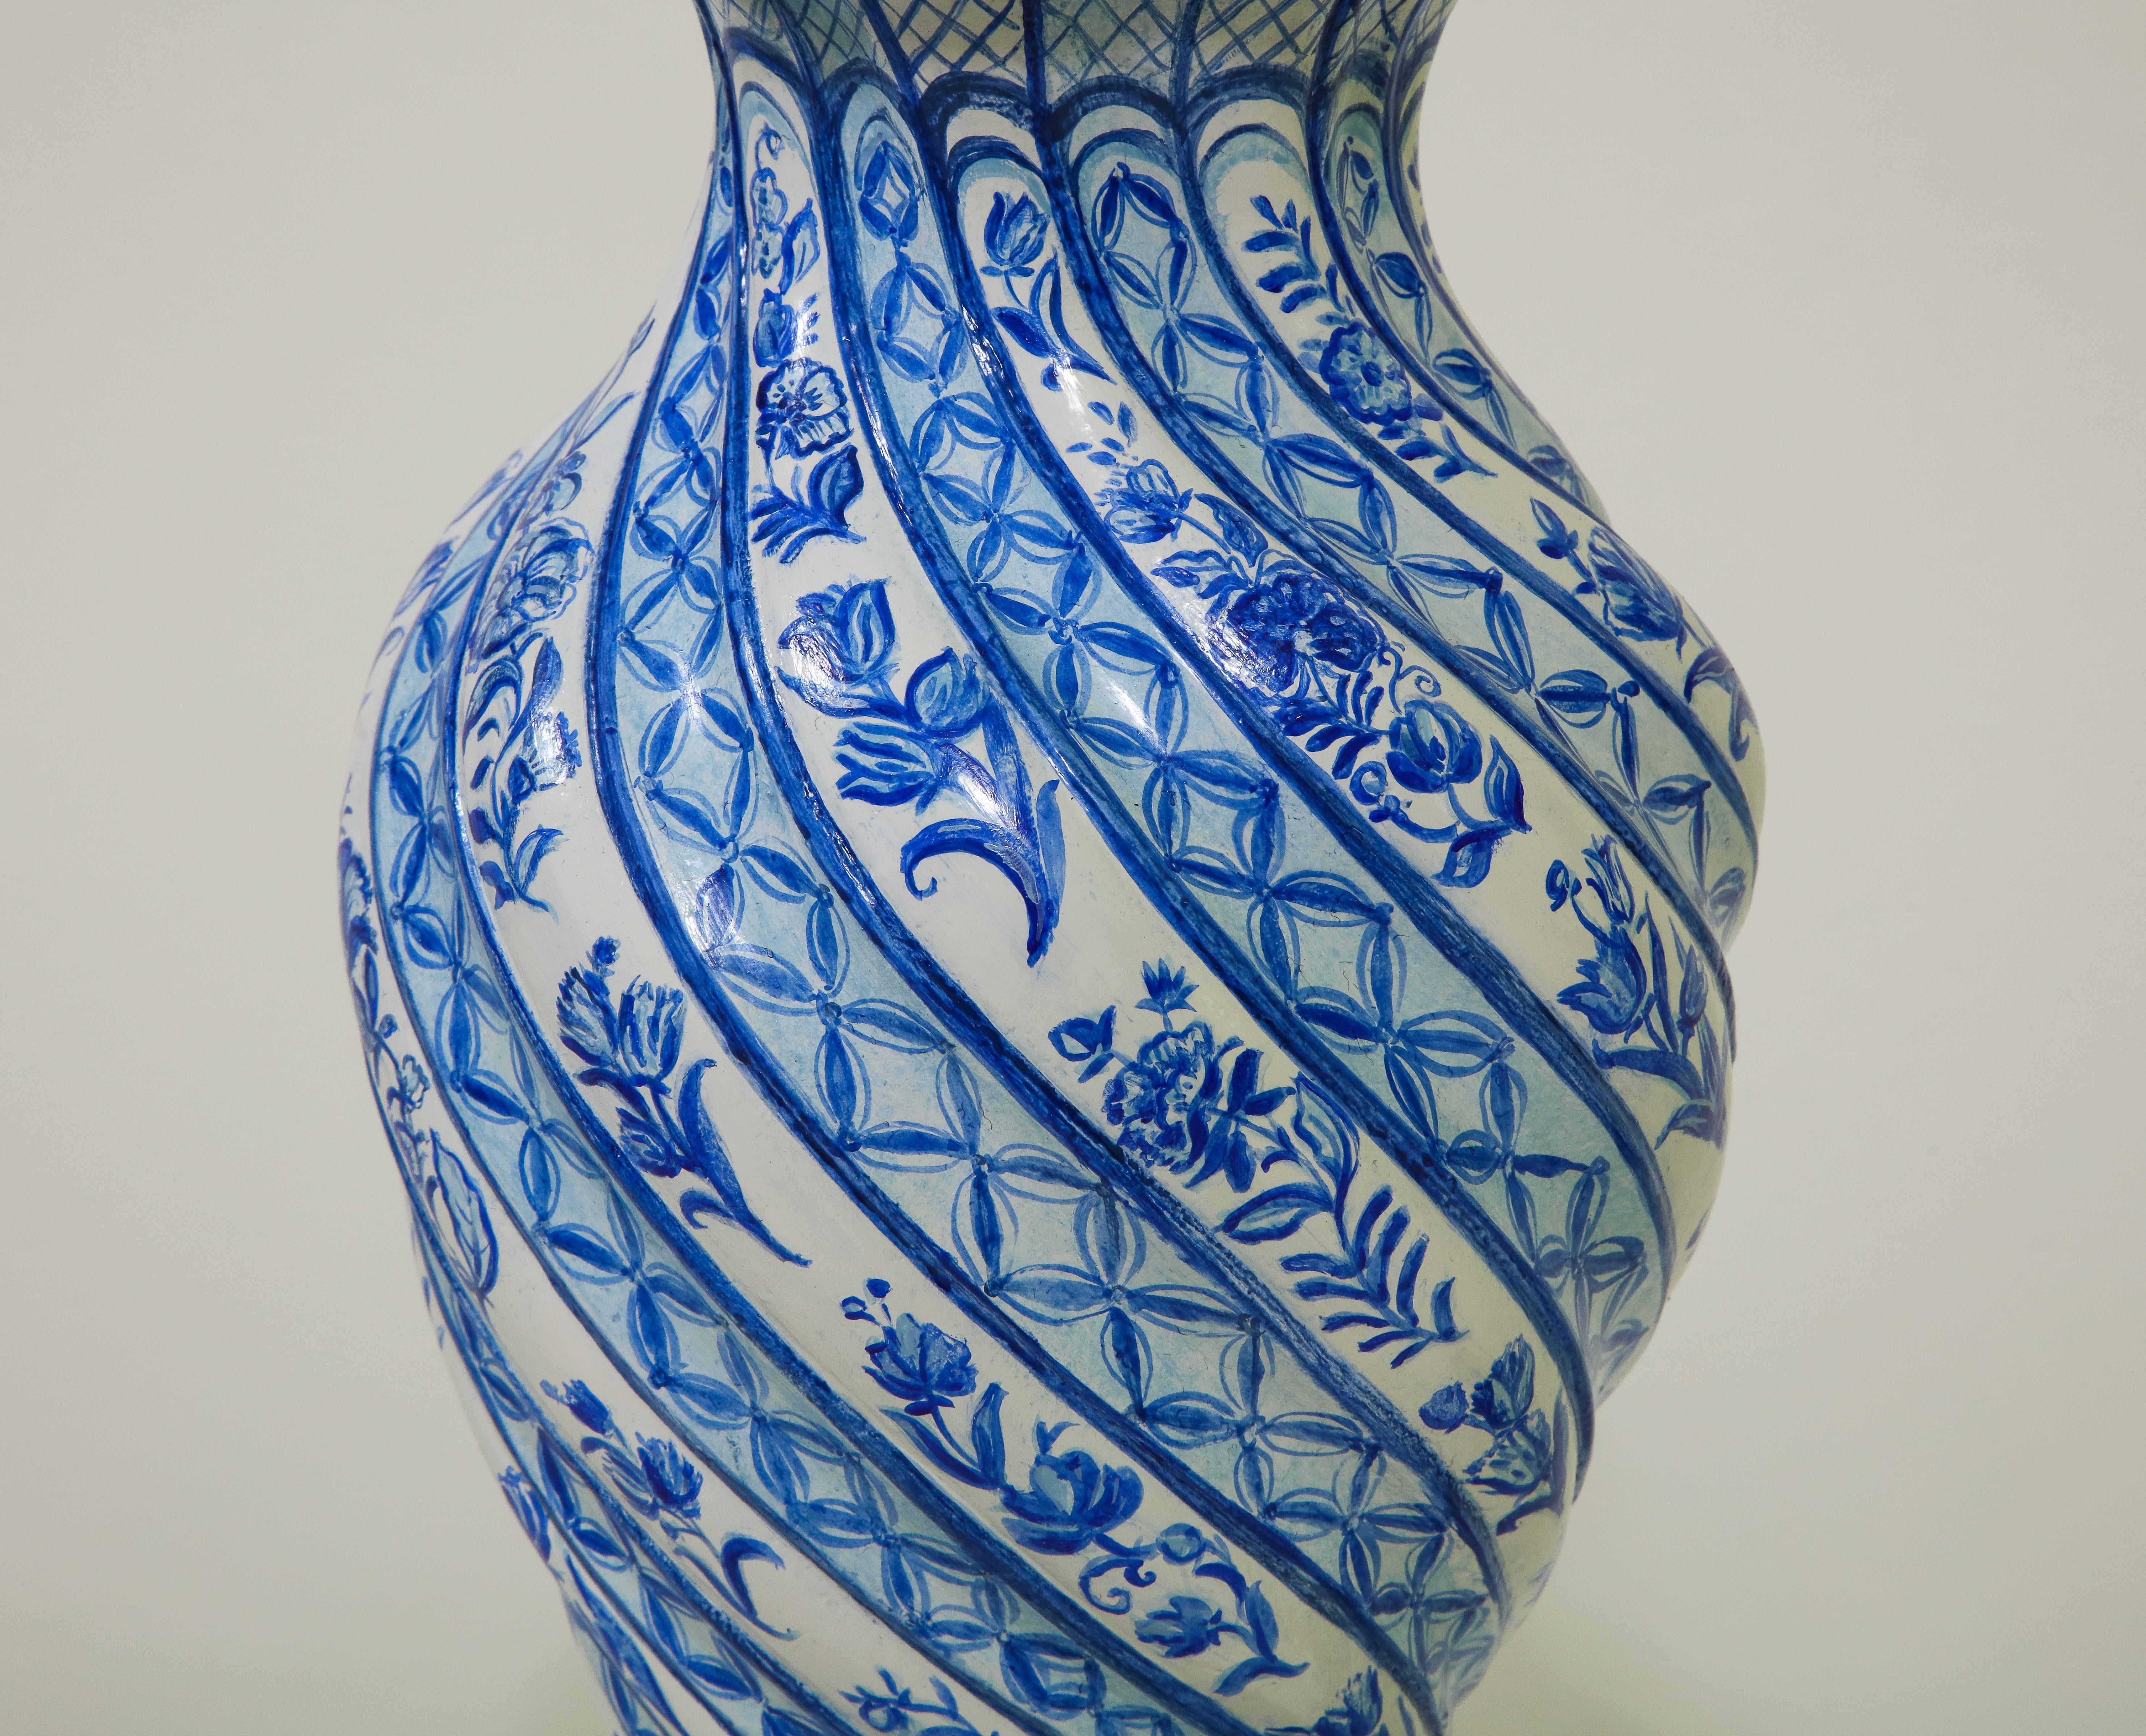 Contemporary Haleh Atabeigi x Mario Buatta Blue and White Lamp